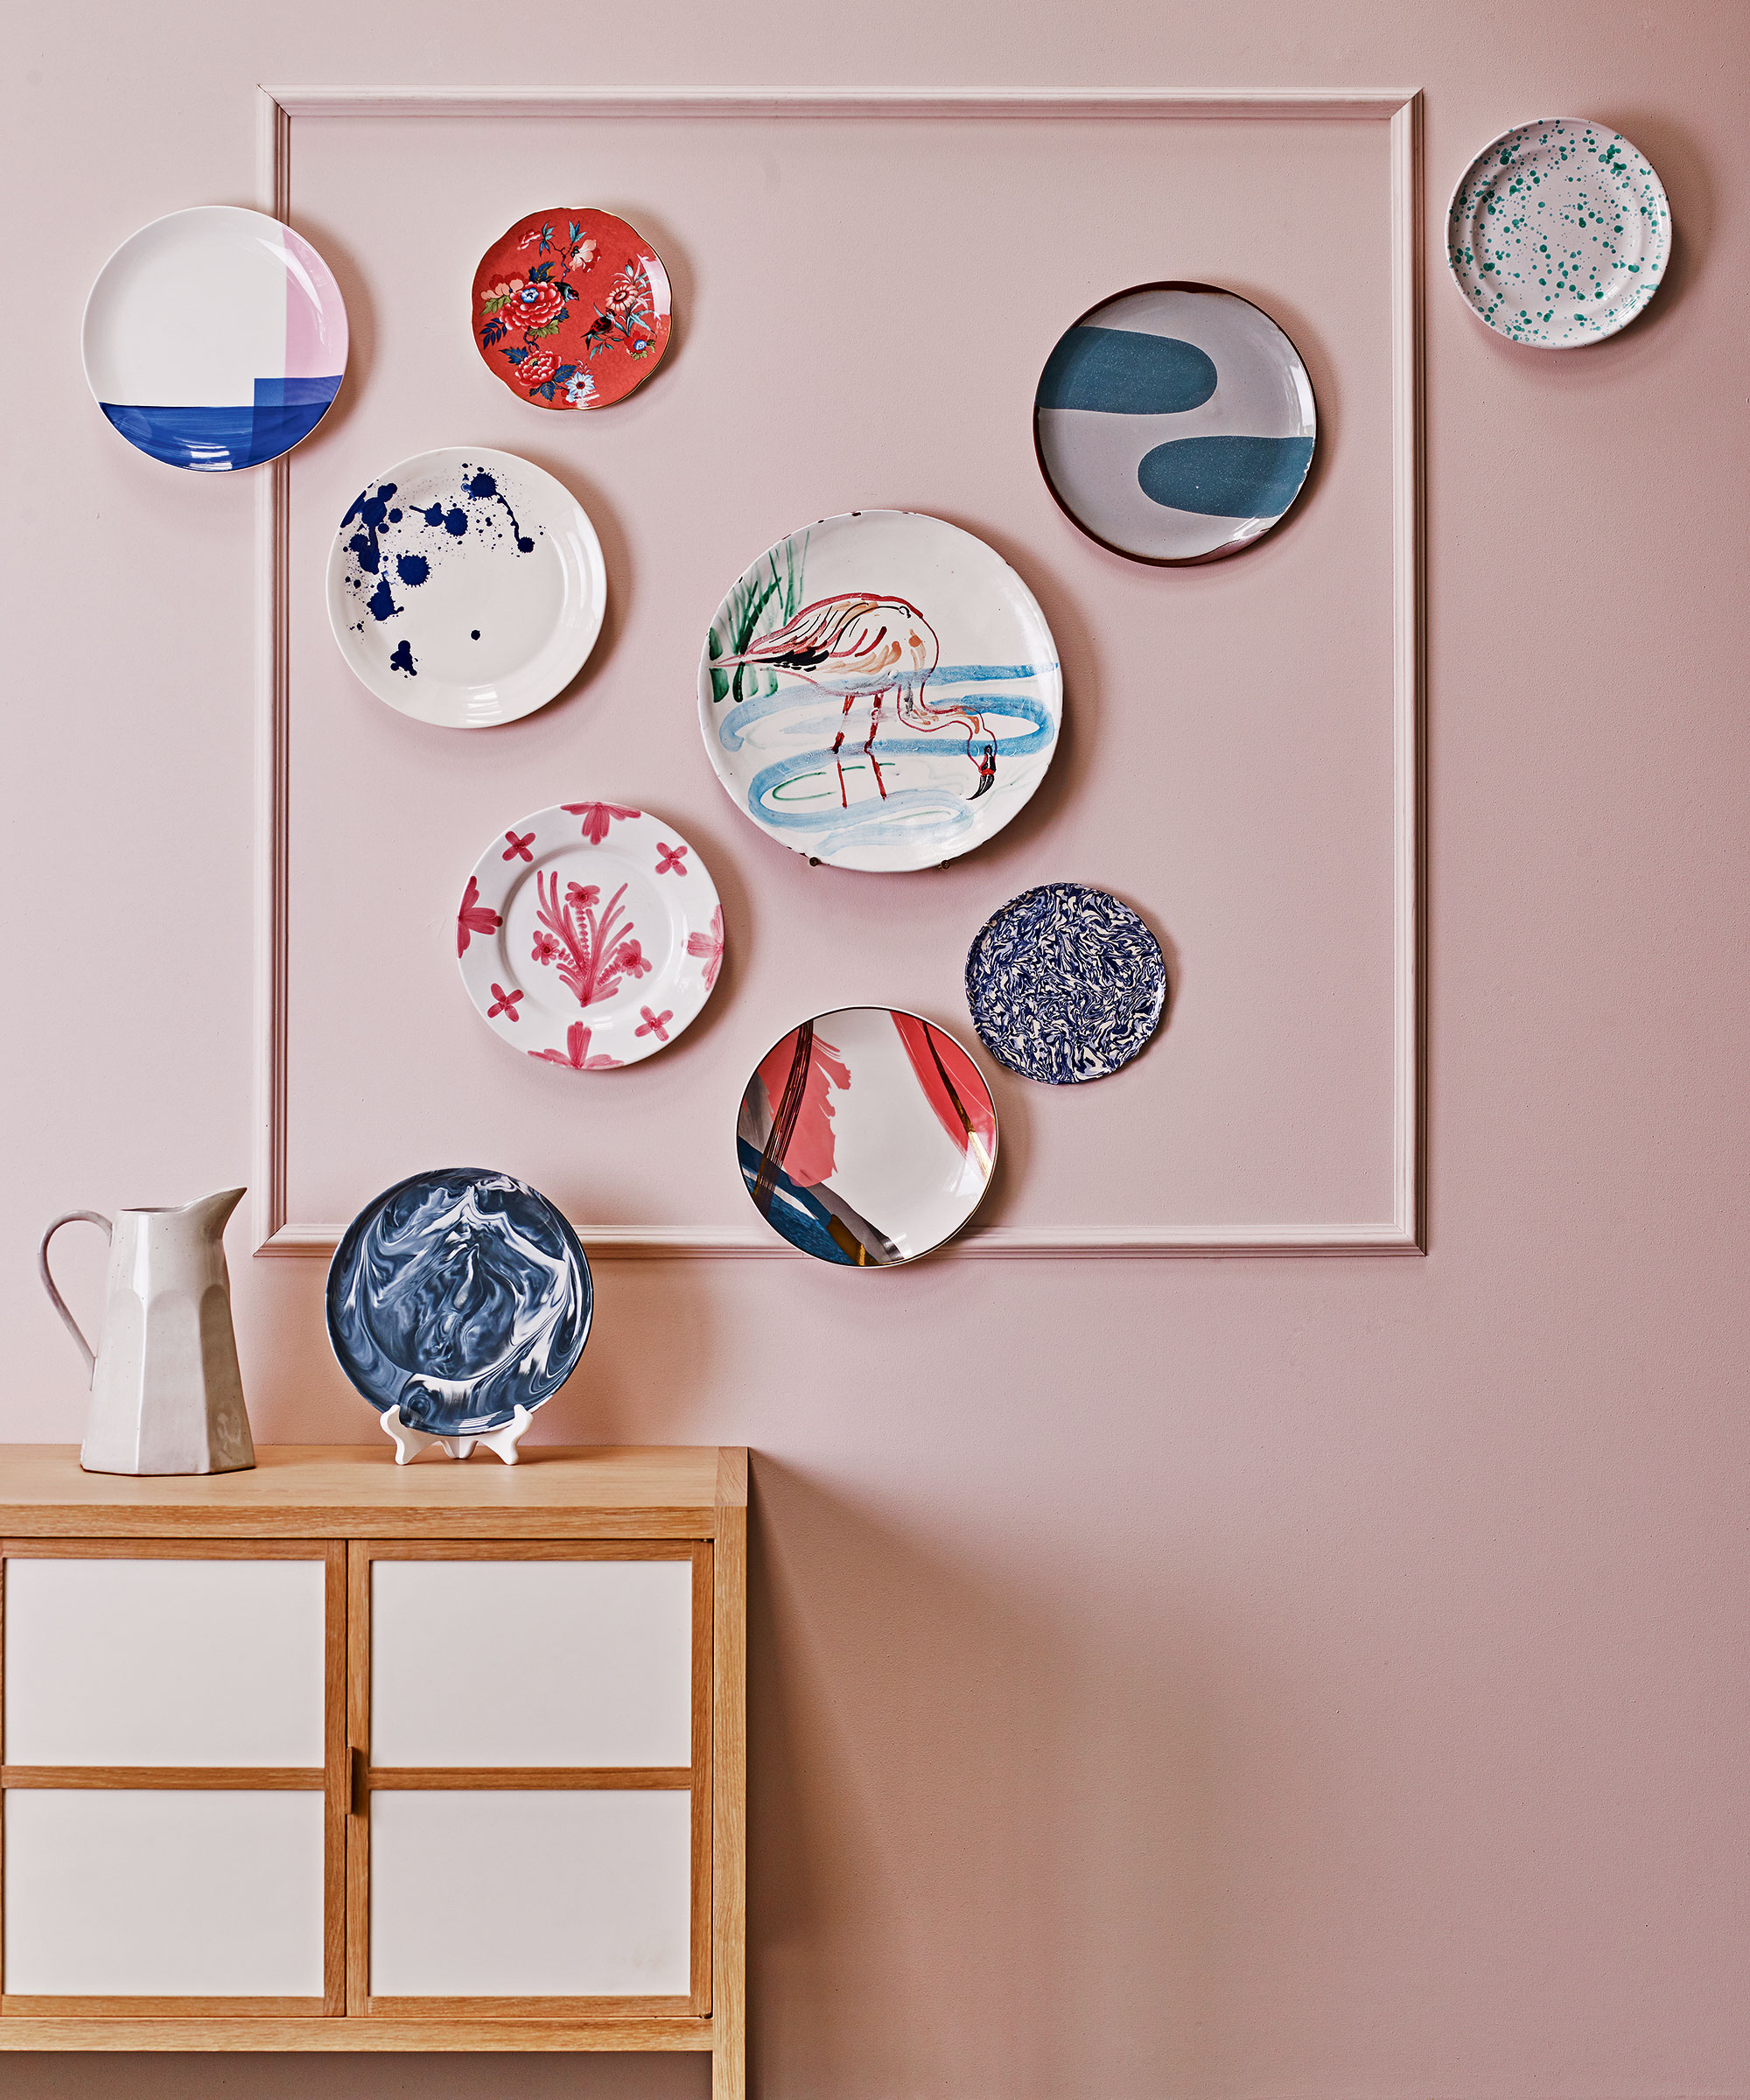 Wall decor ideas with plates